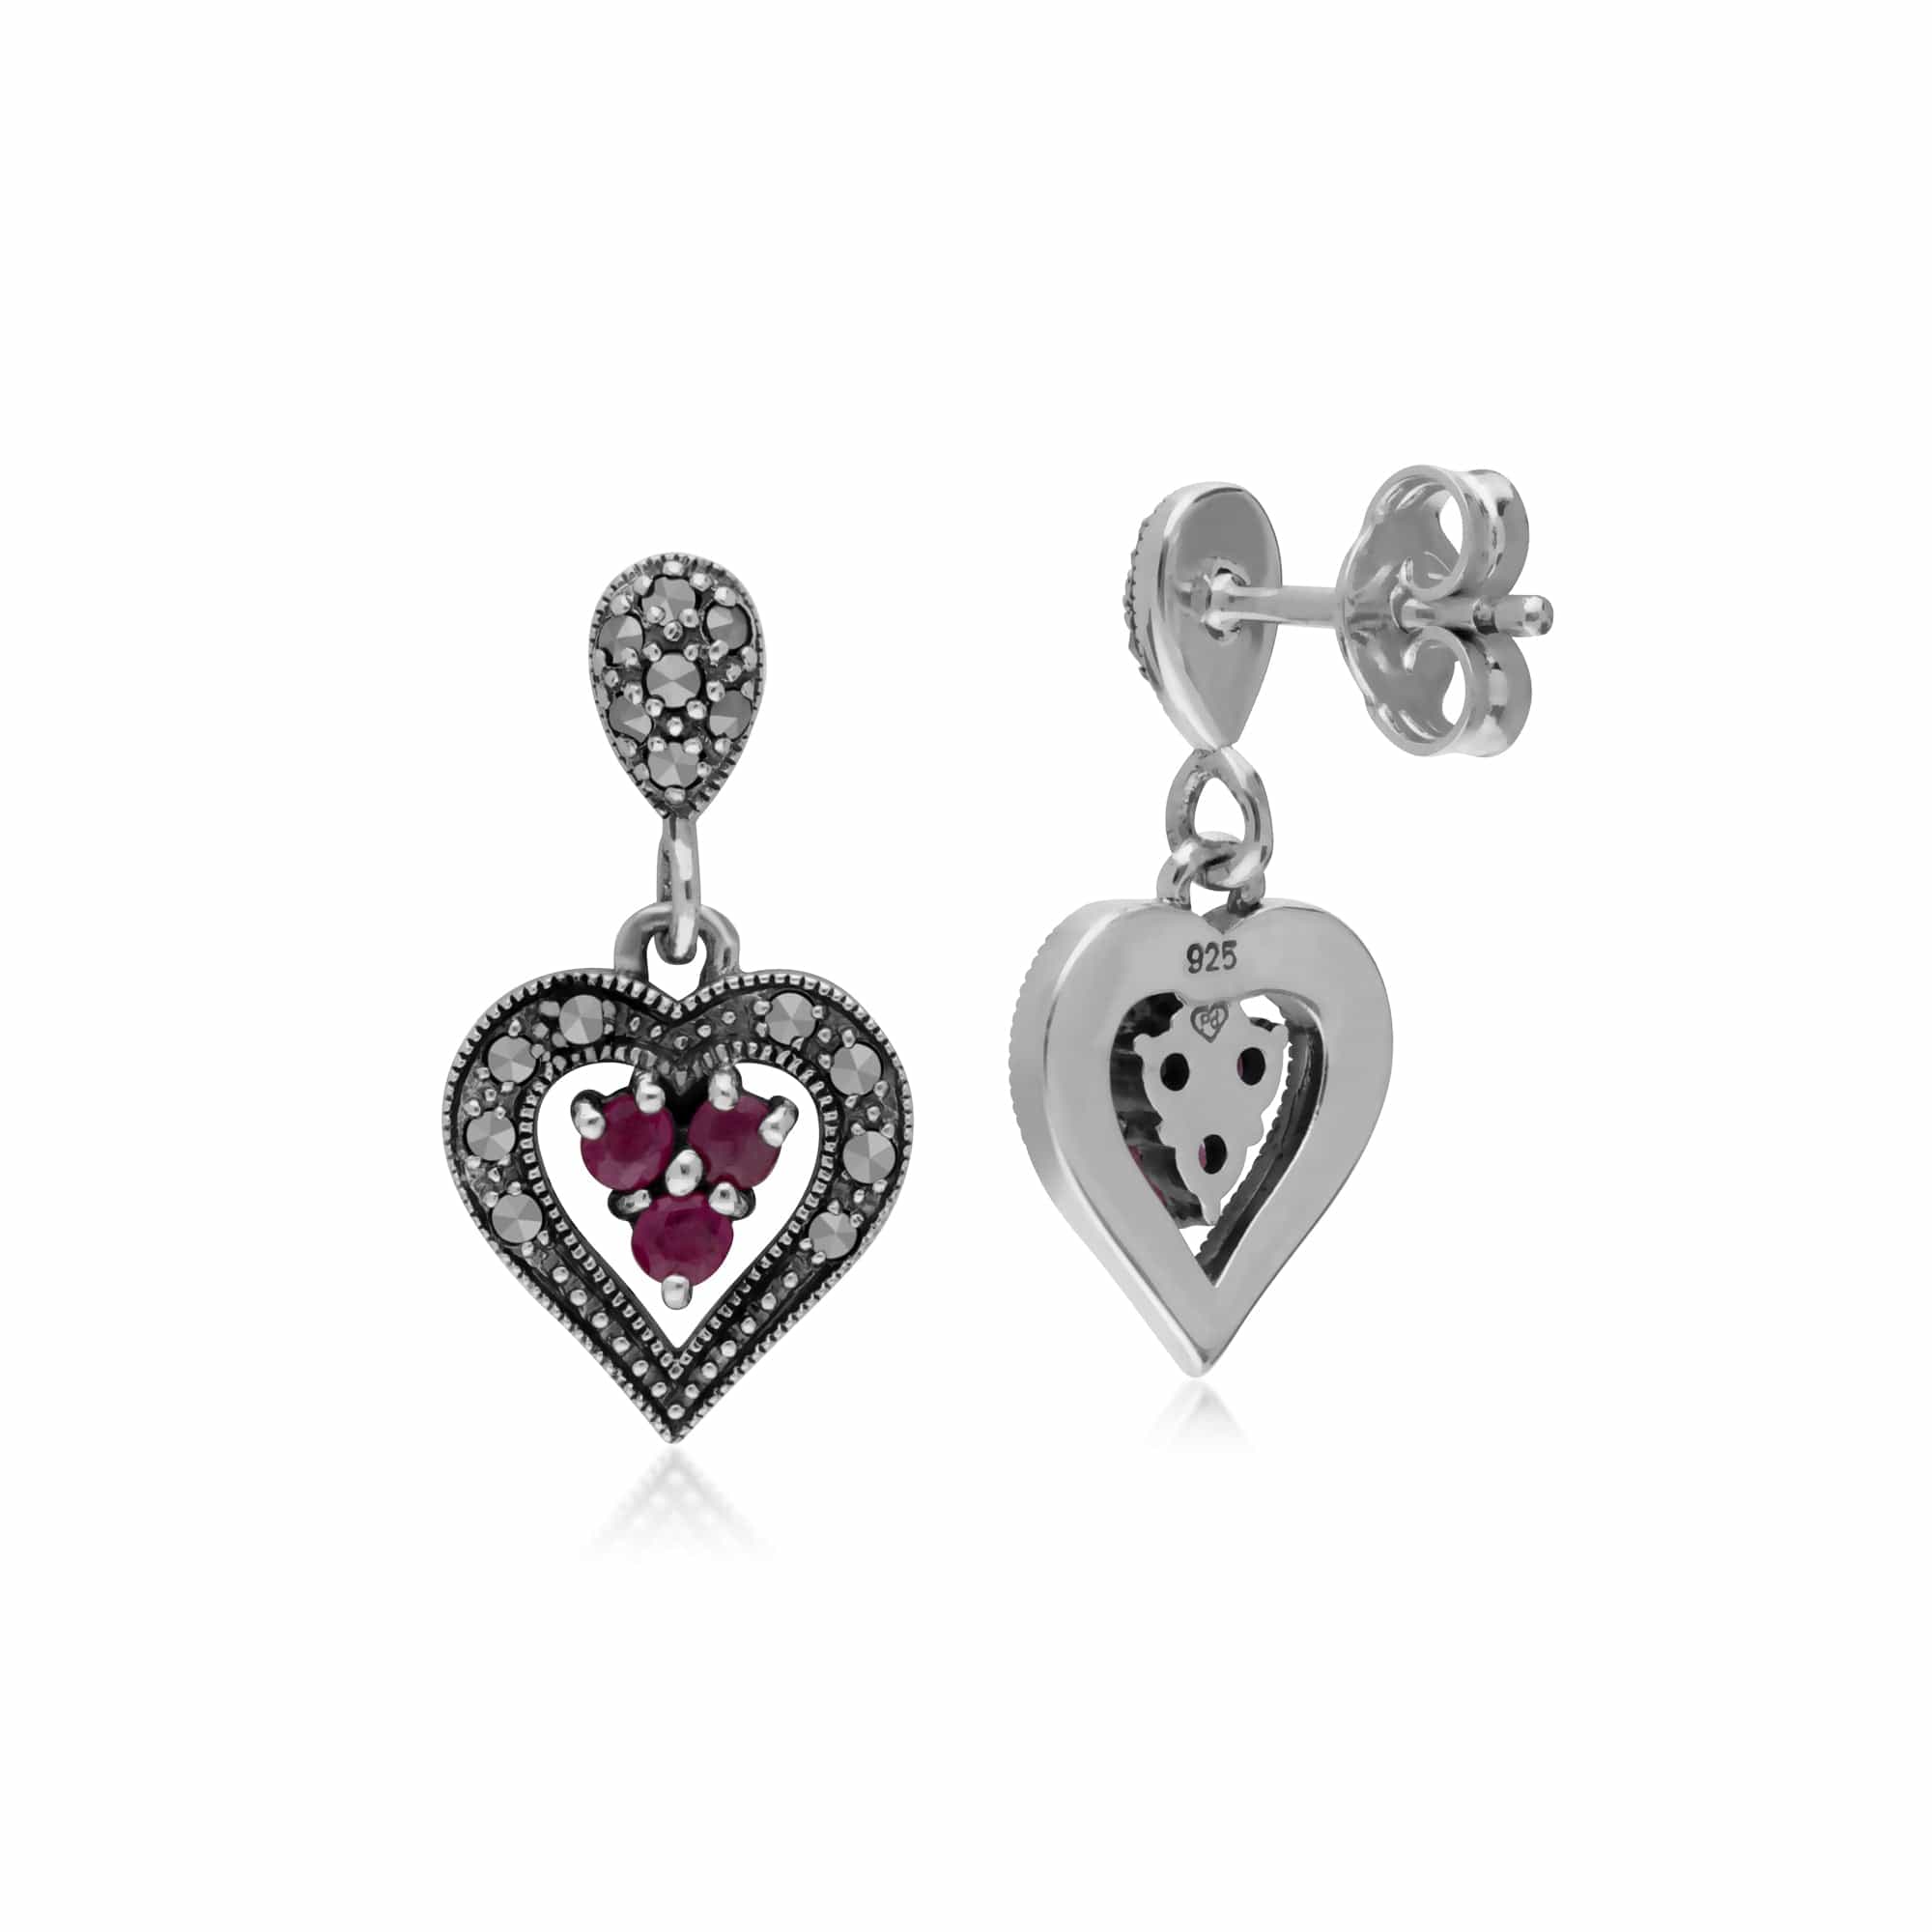 214E616102925 Art Deco Style  Round Ruby & Marcasite Heart Drop Earrings in 925 Sterling Silver 2